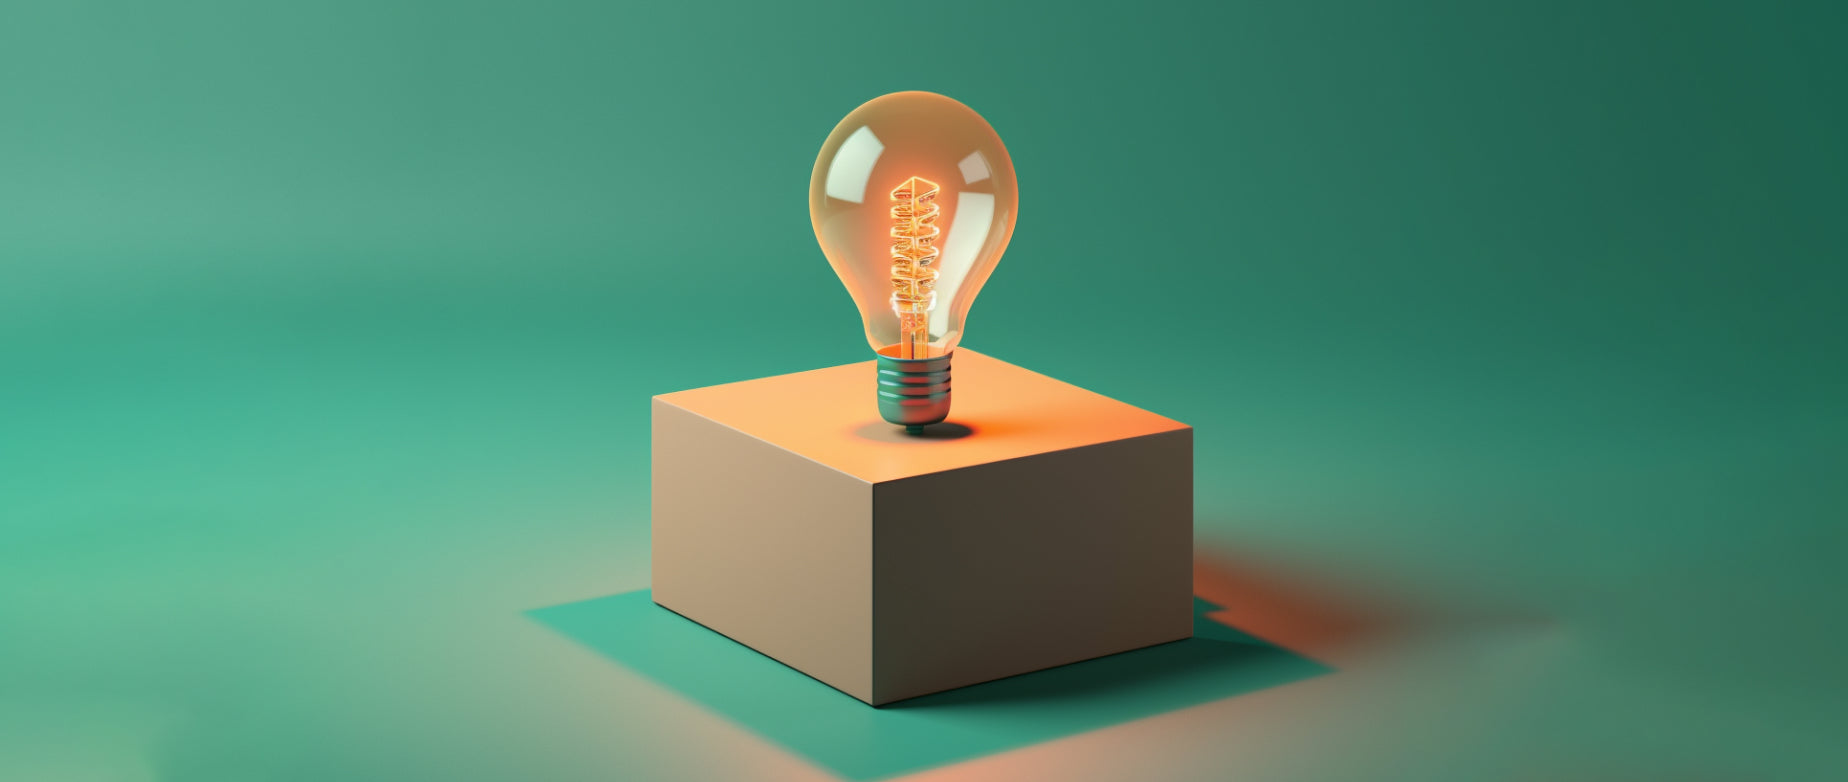 a lightbulb floating above a square box: types of entrepreneurship